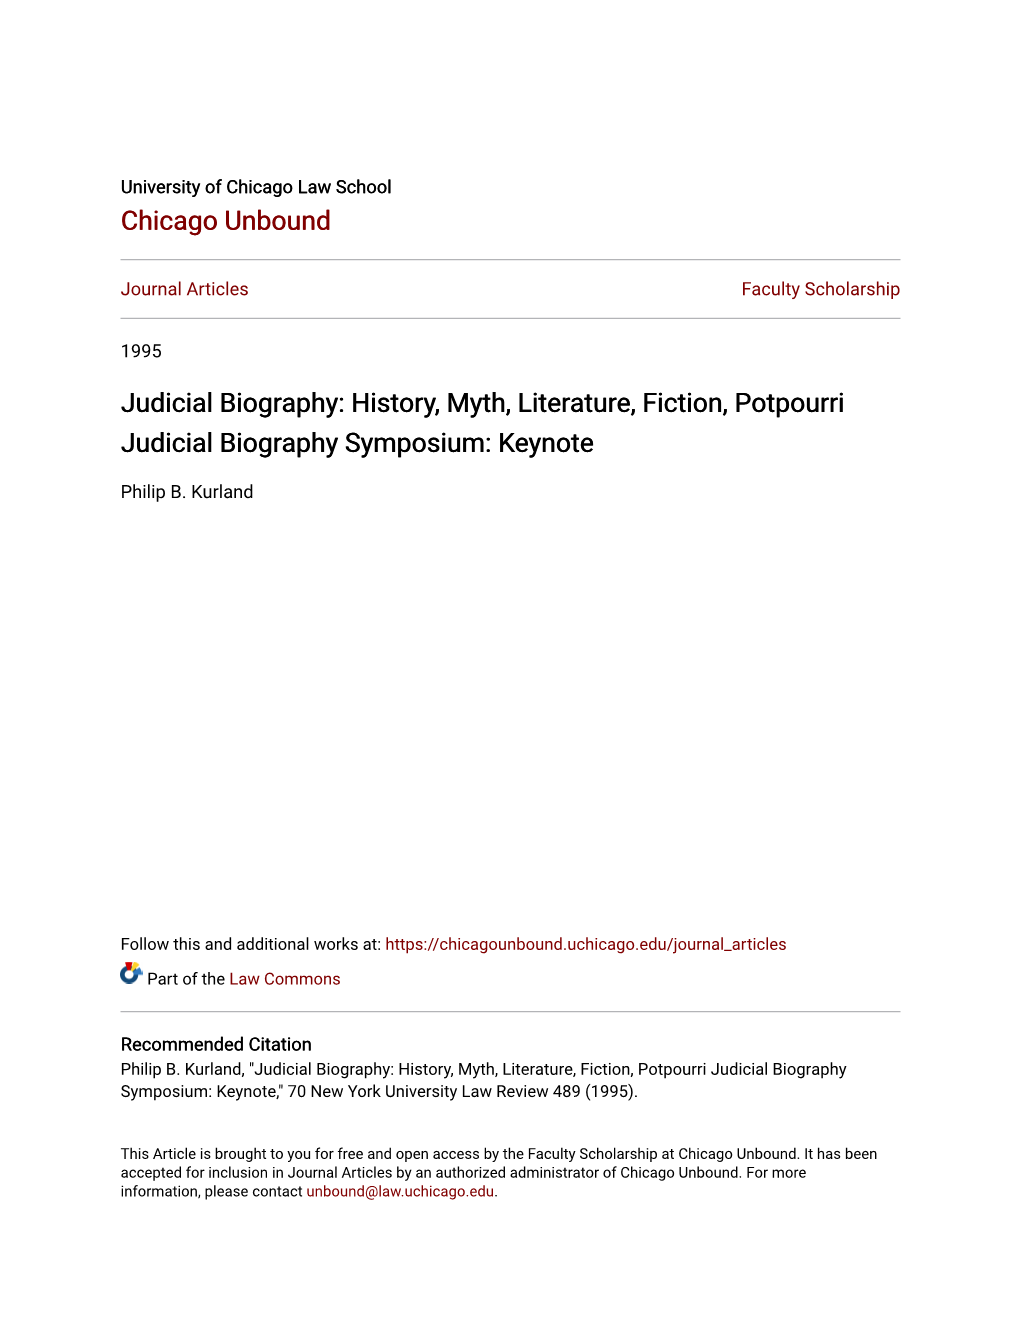 History, Myth, Literature, Fiction, Potpourri Judicial Biography Symposium: Keynote